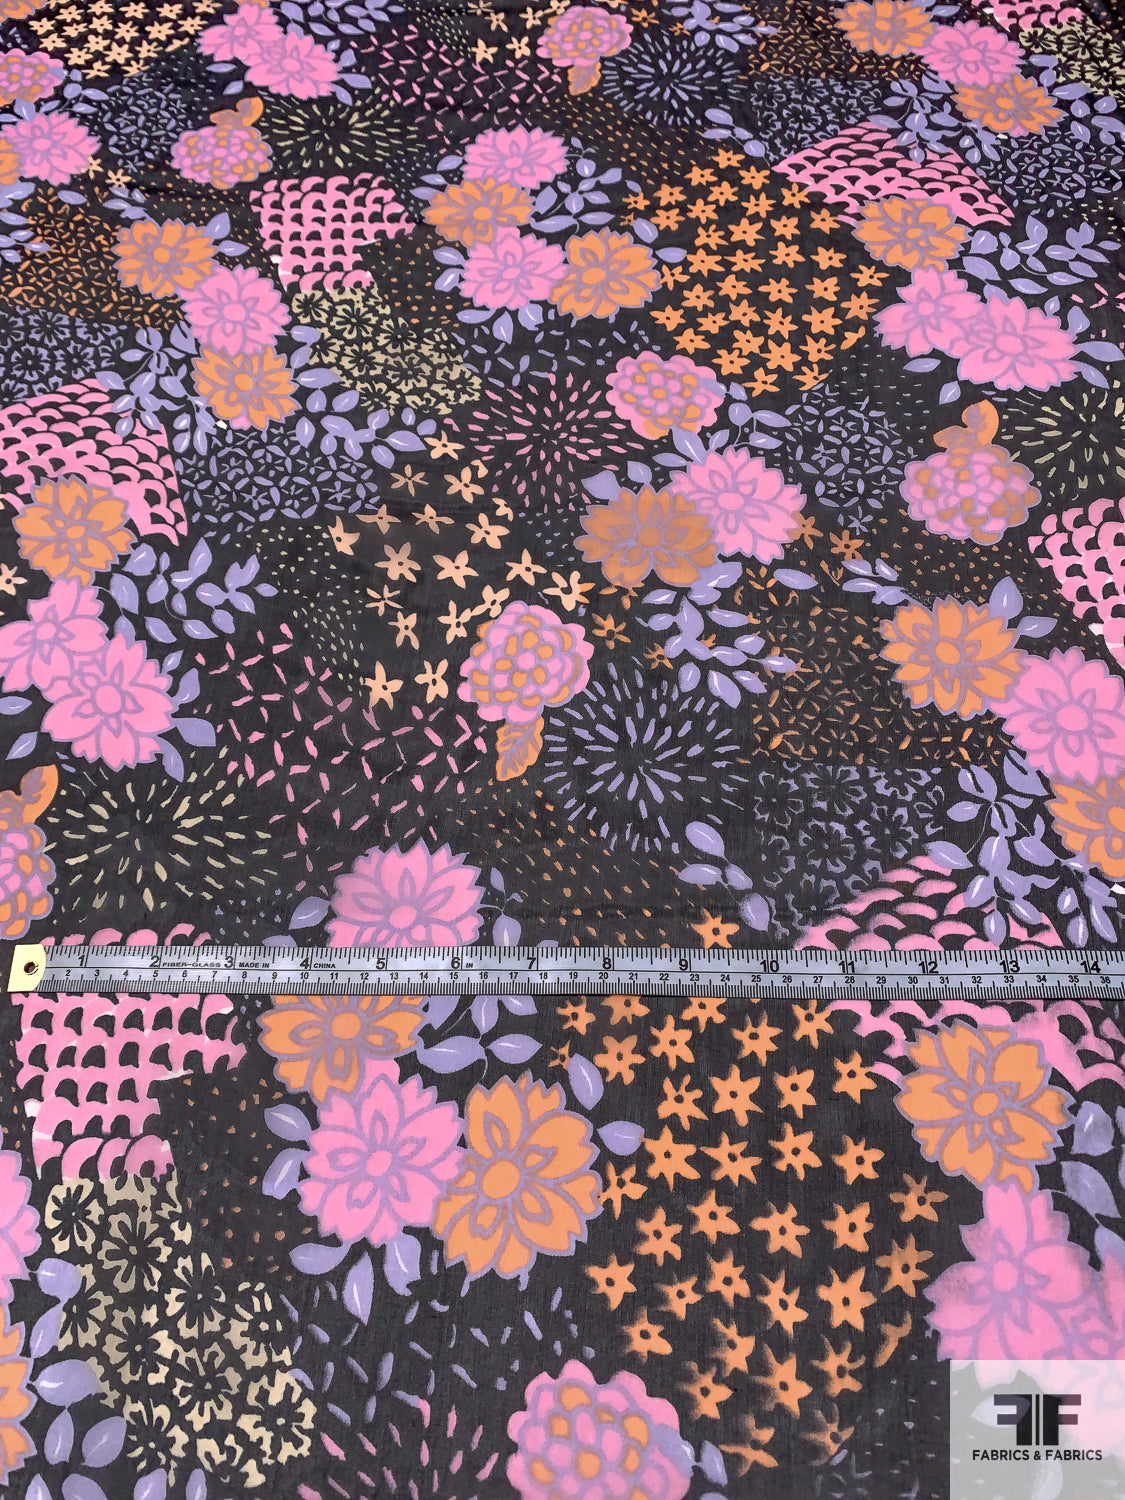 Floral Groovy Collage Printed Silk Chiffon - Pink / Light Purple / Orange / Black